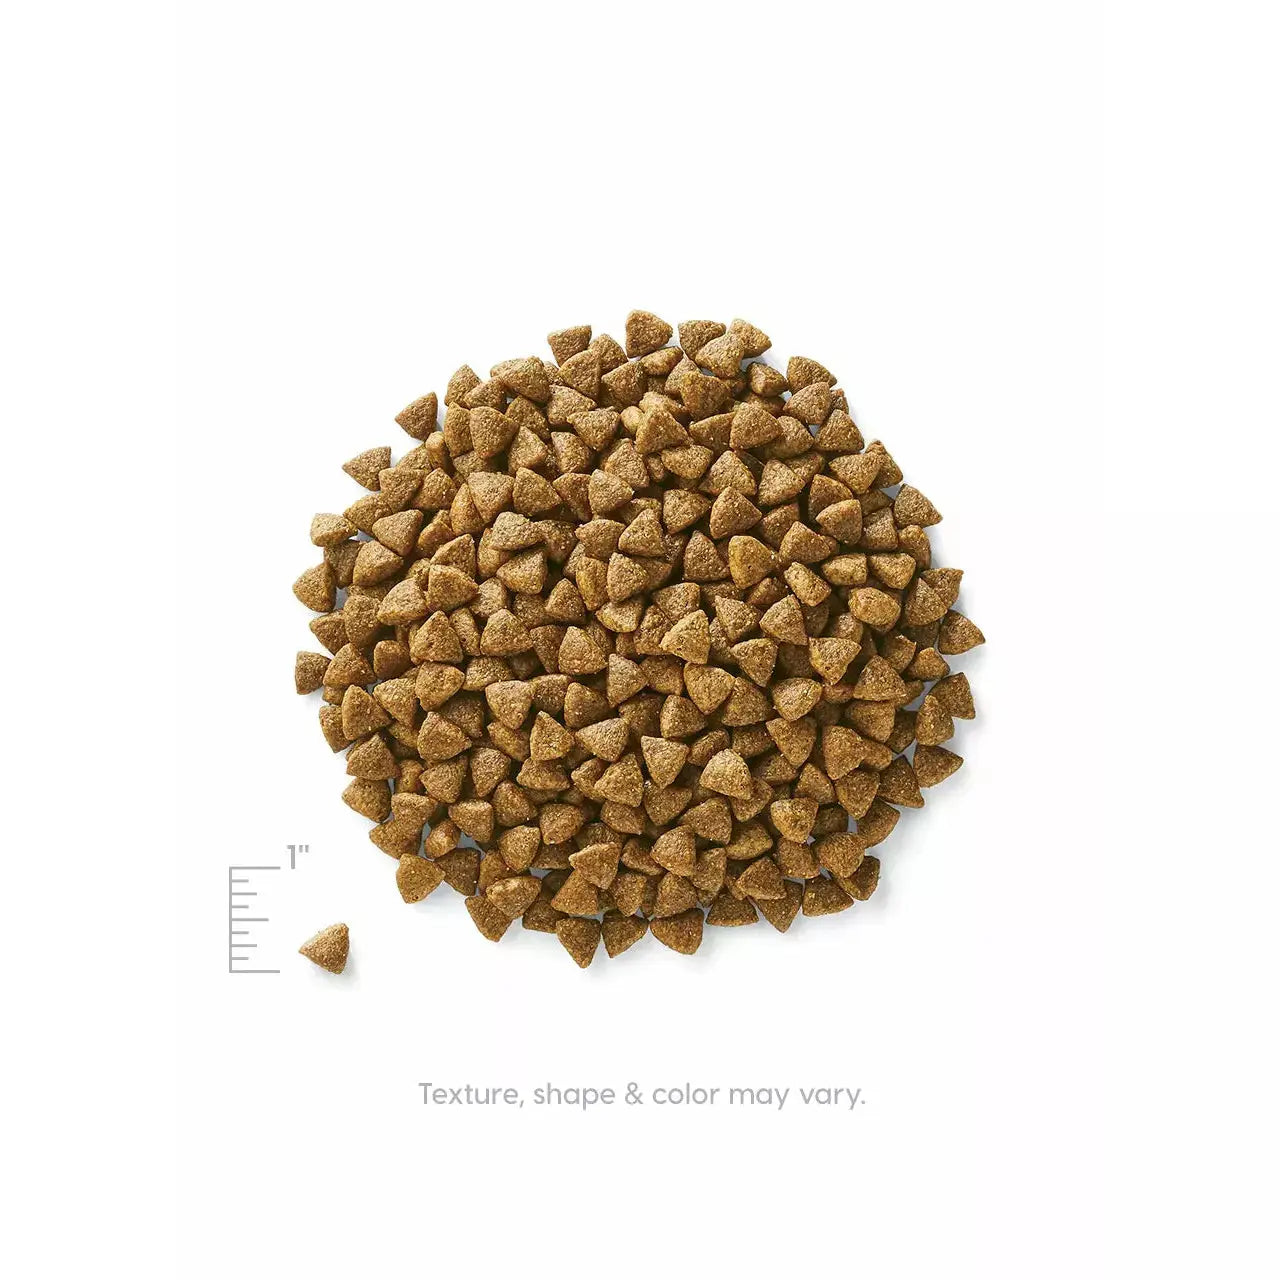 Solid Gold Pet Wild Heart Grain Free Quail Chickpeas & Pumpkin Recipe Dog Food 24 Lbs Solid Gold